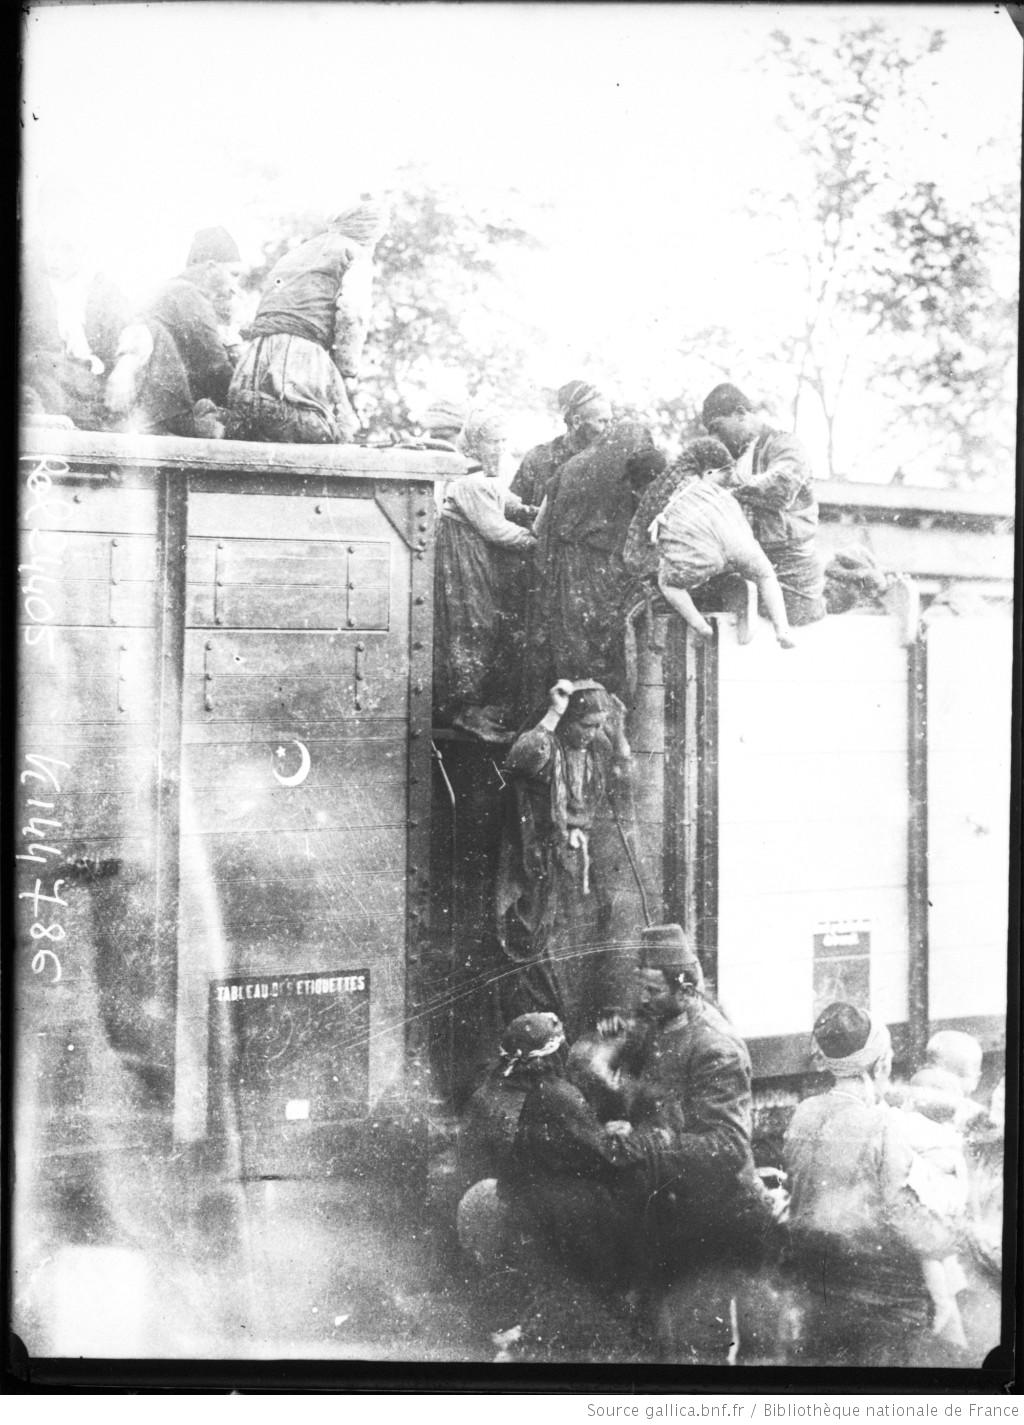 Turske izbeglice, 1912 - N6922030_JPEG_1_1DM.jpg